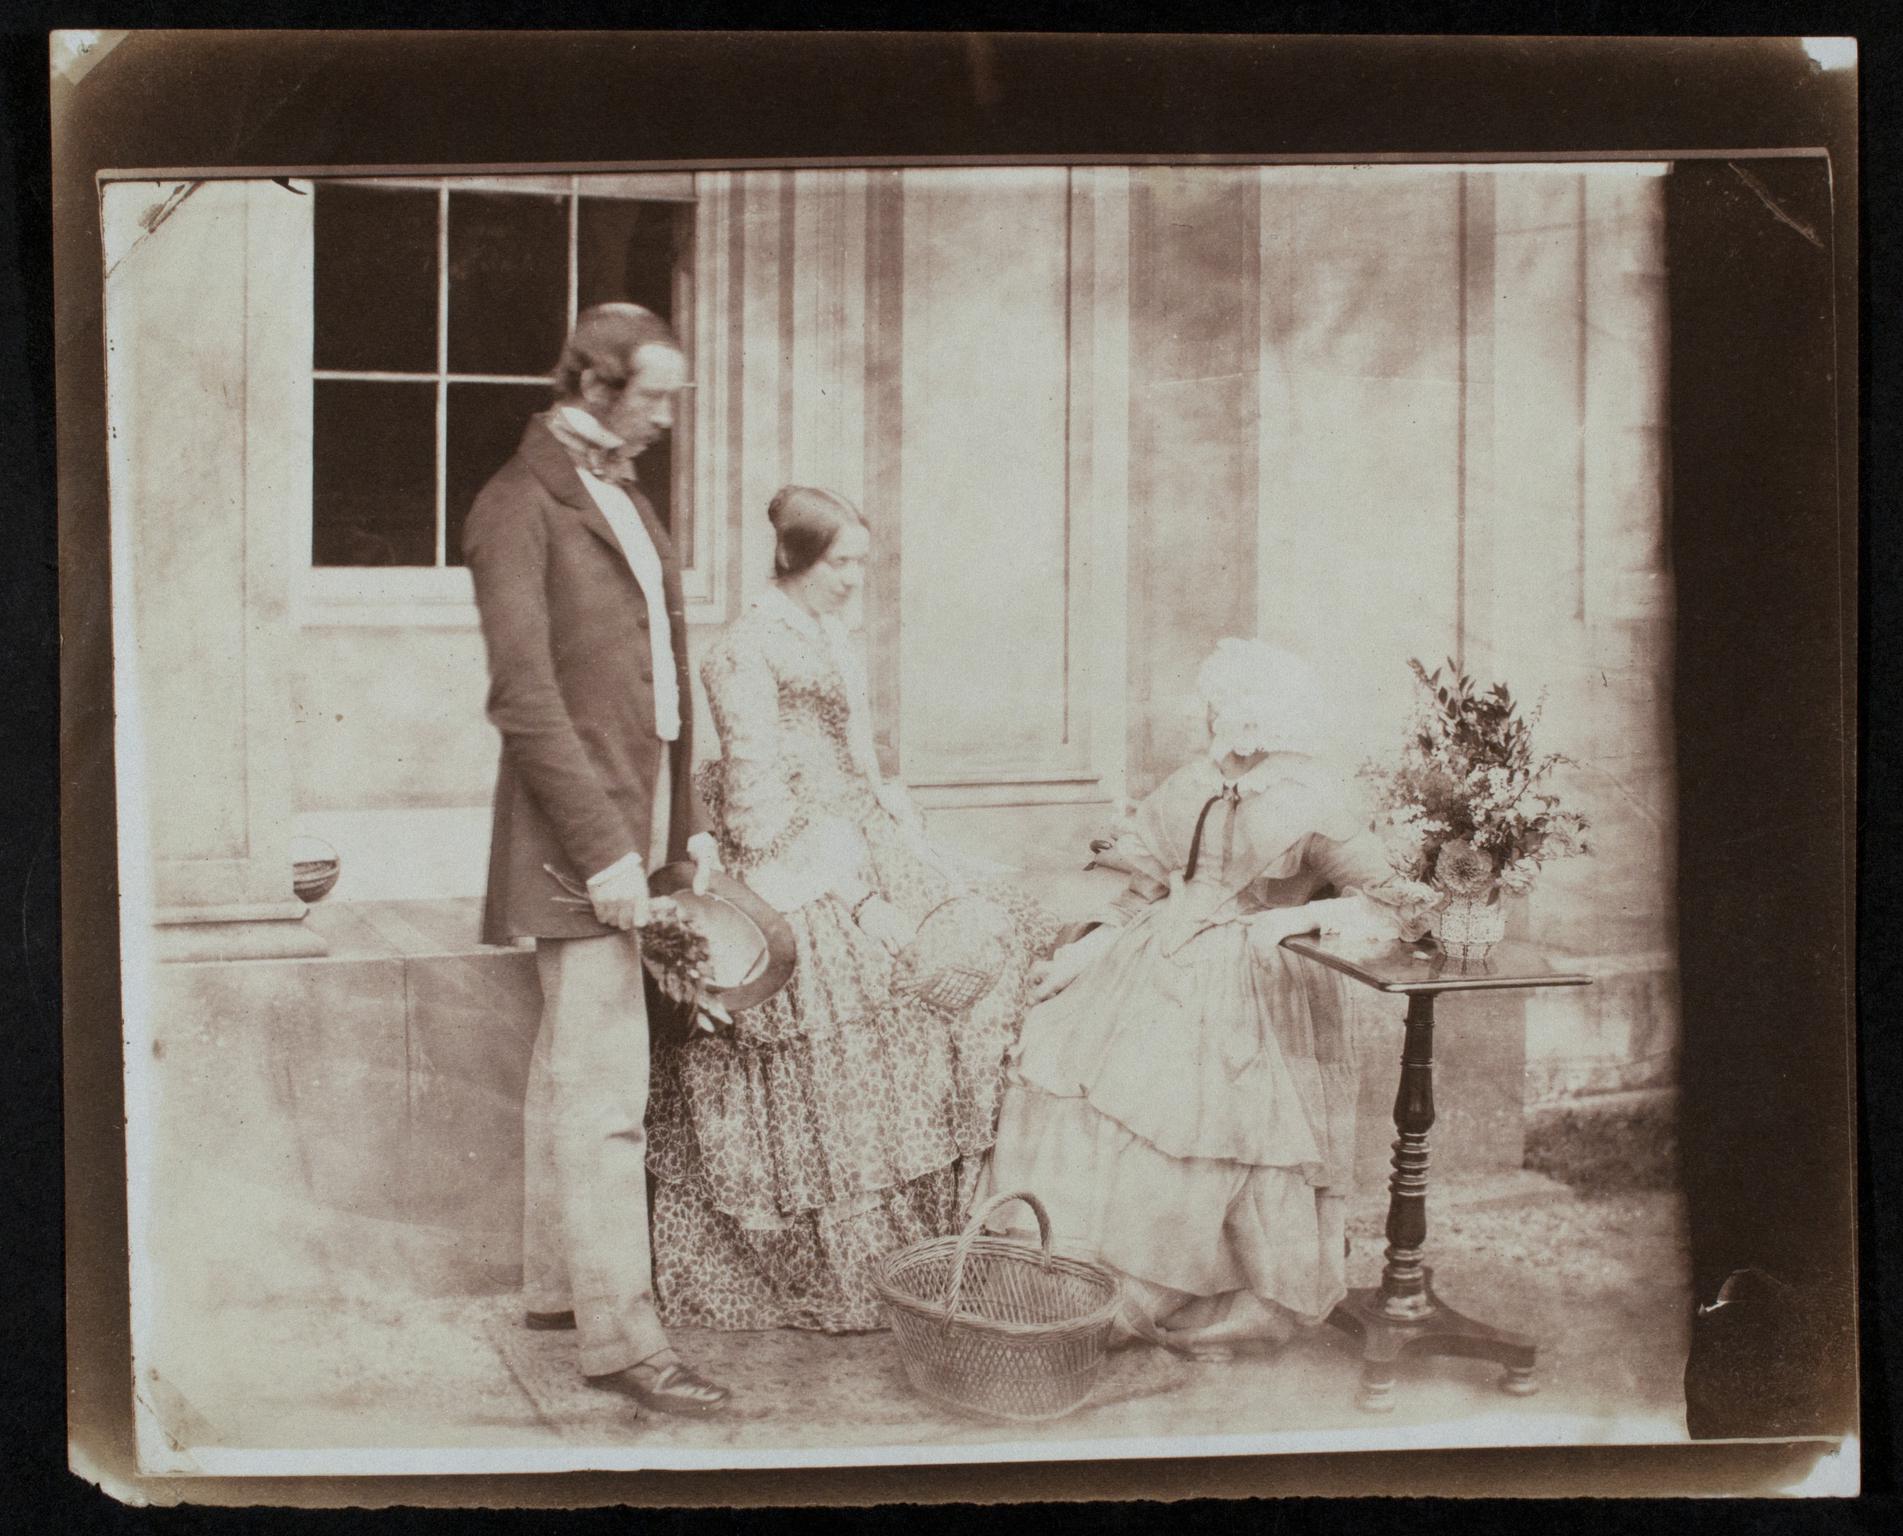 Mr & Mrs Smith & Mme Labouchere, photograph